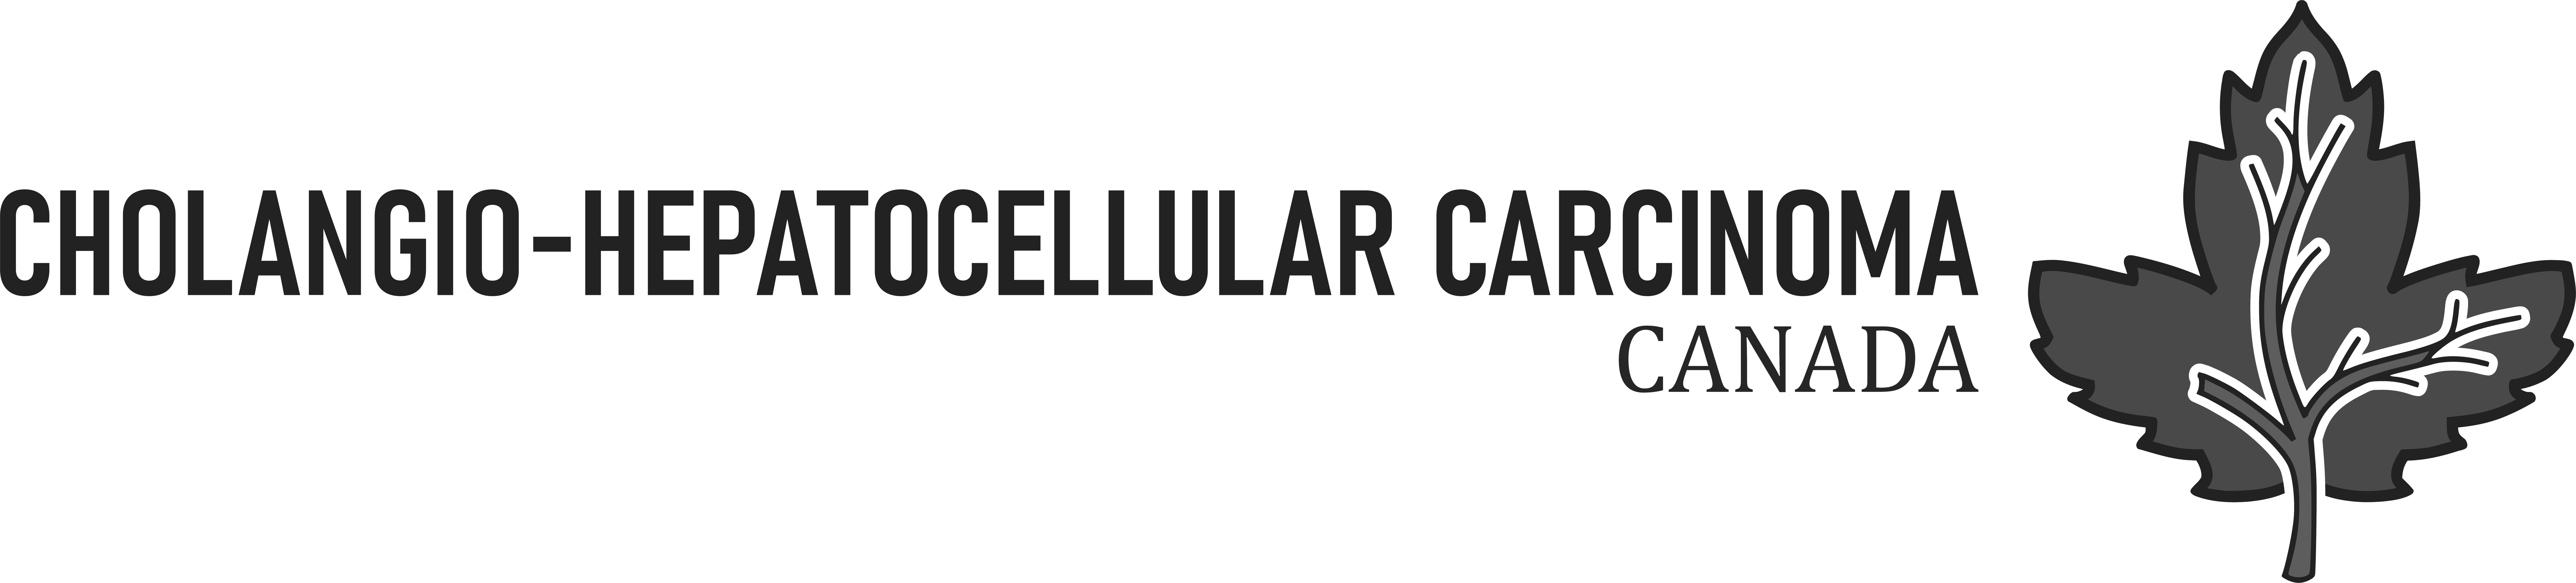 Cholangio-Hepatocellular Carcinoma Canada Logo